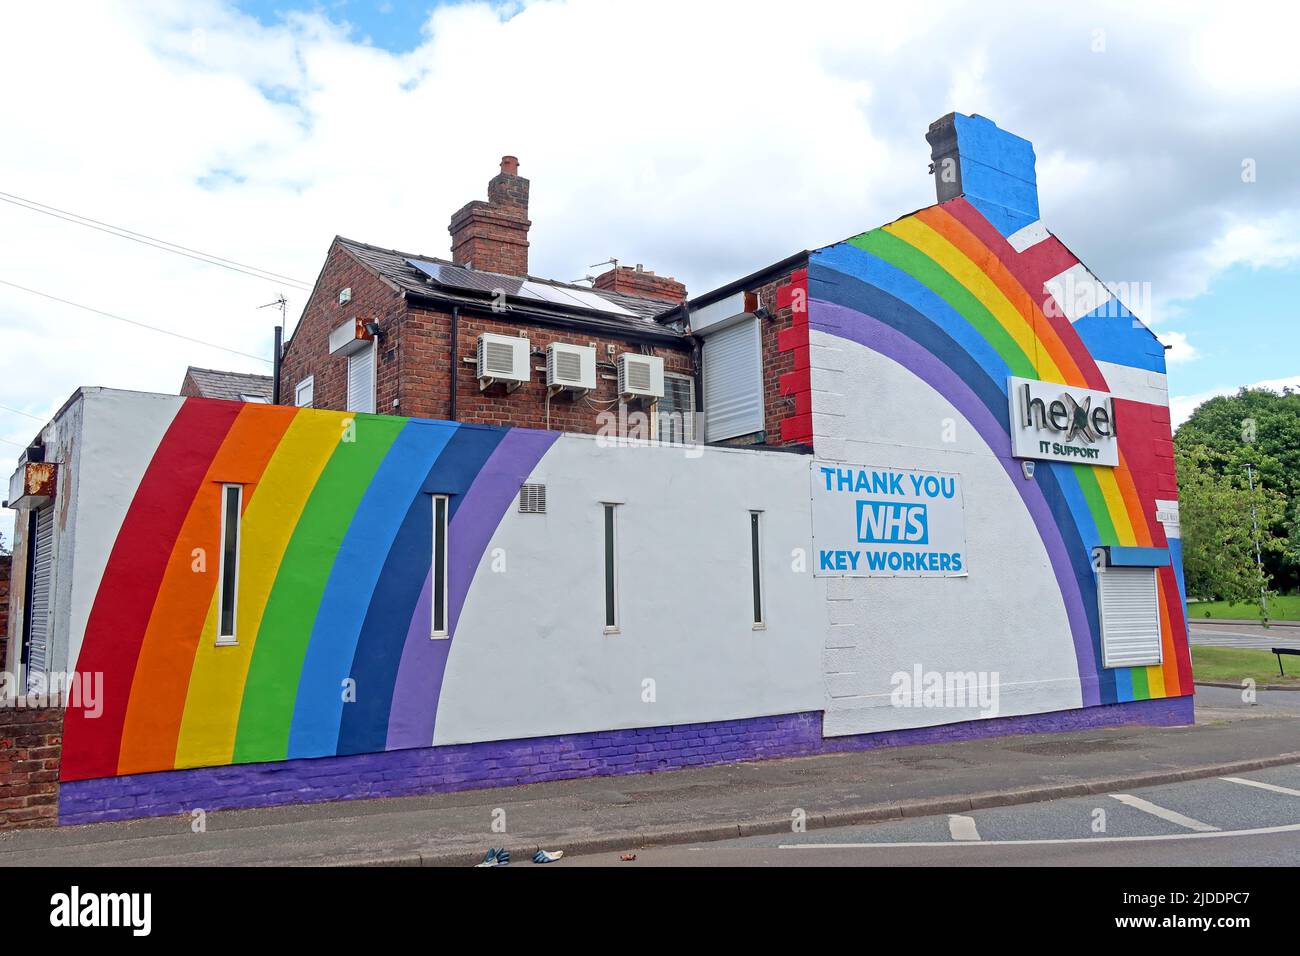 Rainbow on a Gable End, Halla Way, Hexel IT Support, Thank You NHS, 540 Knutsford Rd, Warrington, Cheshire, England, Großbritannien, WA4 1hr Stockfoto